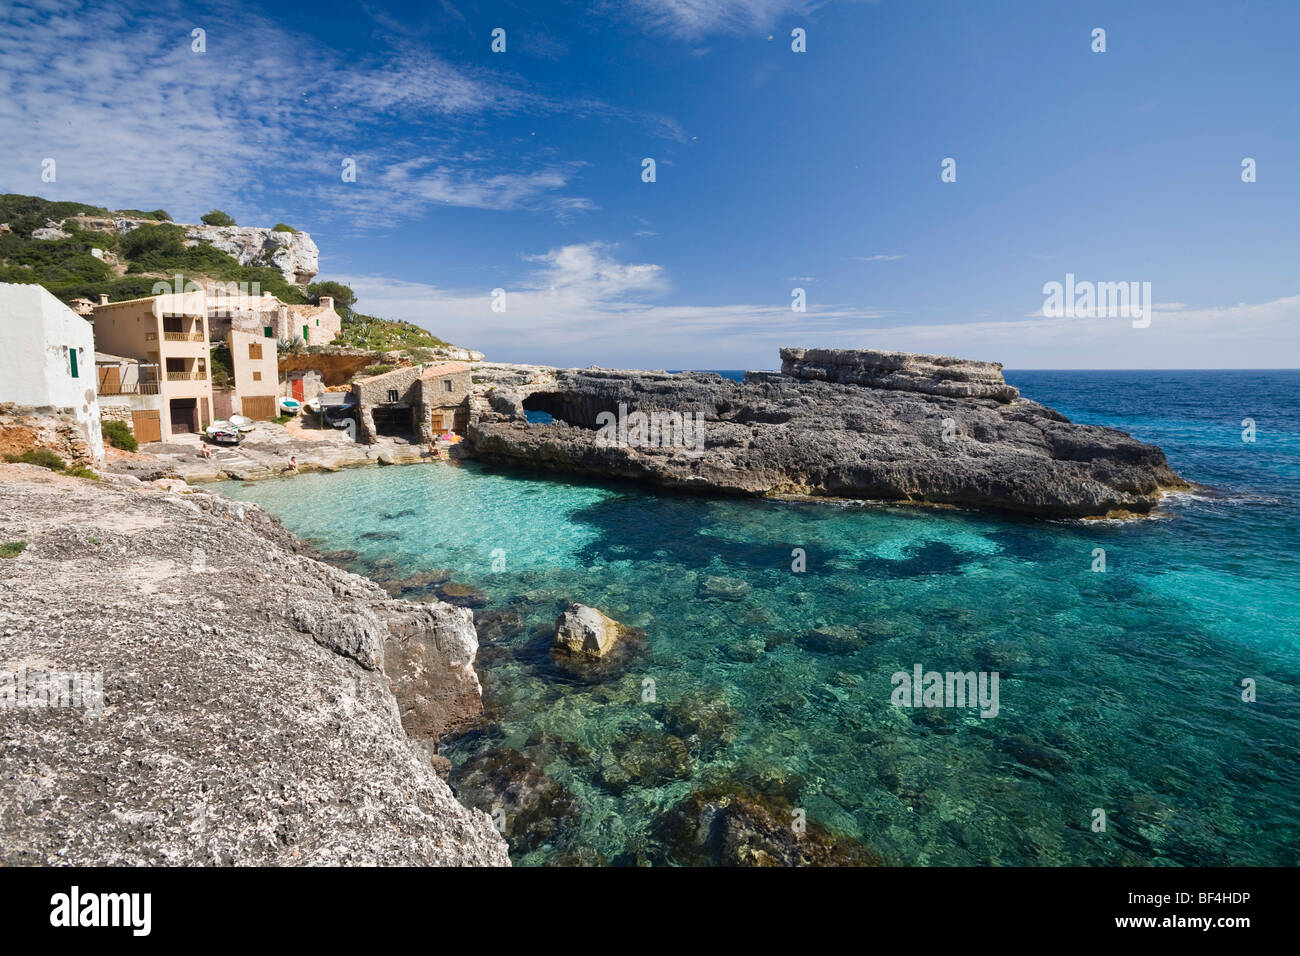 Cala s'Almonia bay, Mallorca, Majorca, Balearic Islands, Mediterranean Sea, Spain, Europe Stock Photo